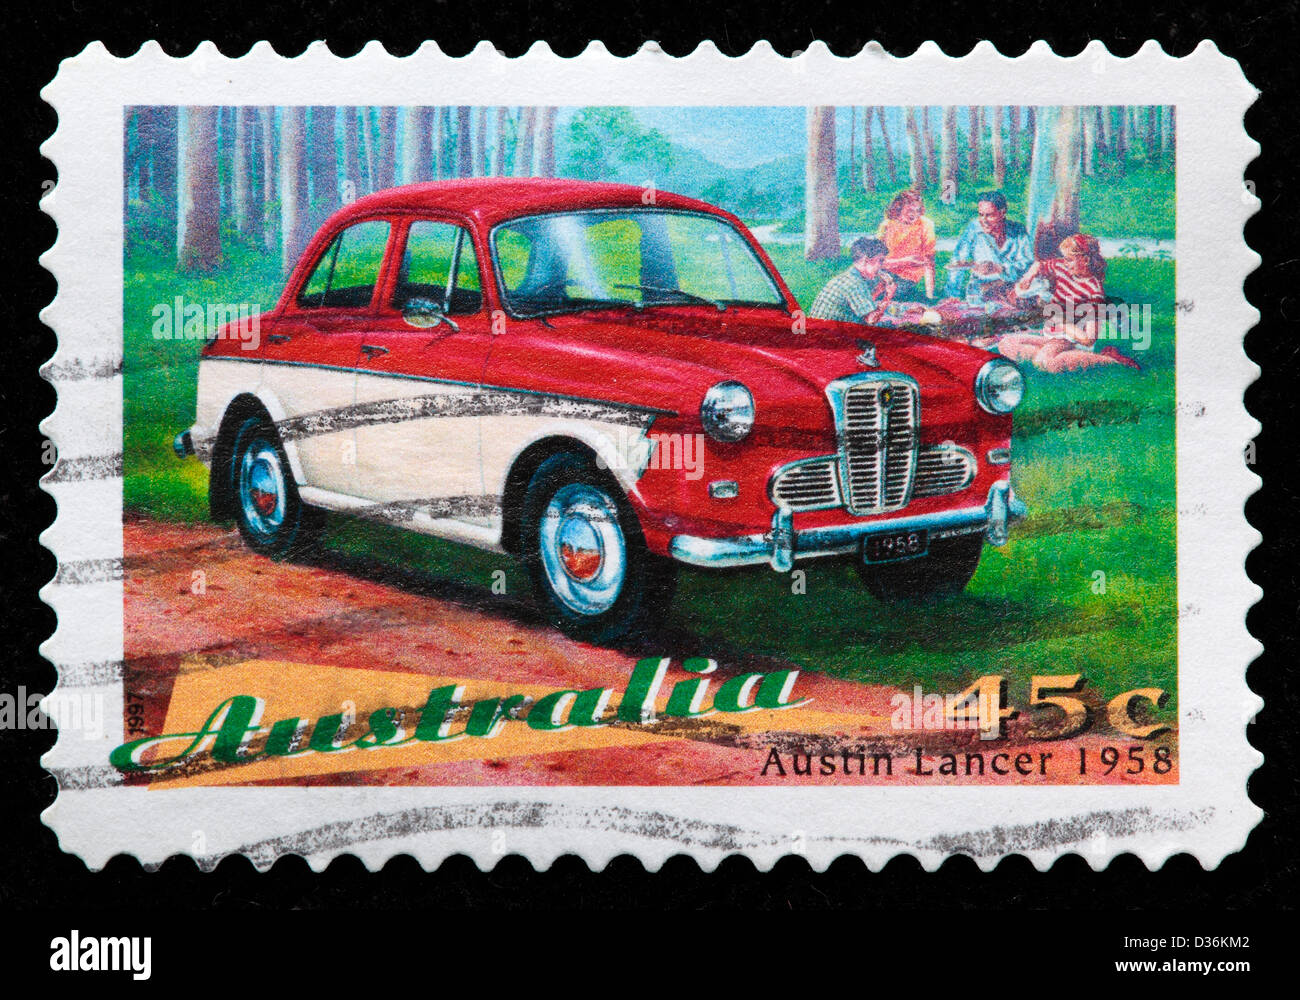 Lancer de Austin (1958), de coches de época, sello, Australia, 1997 Foto de stock